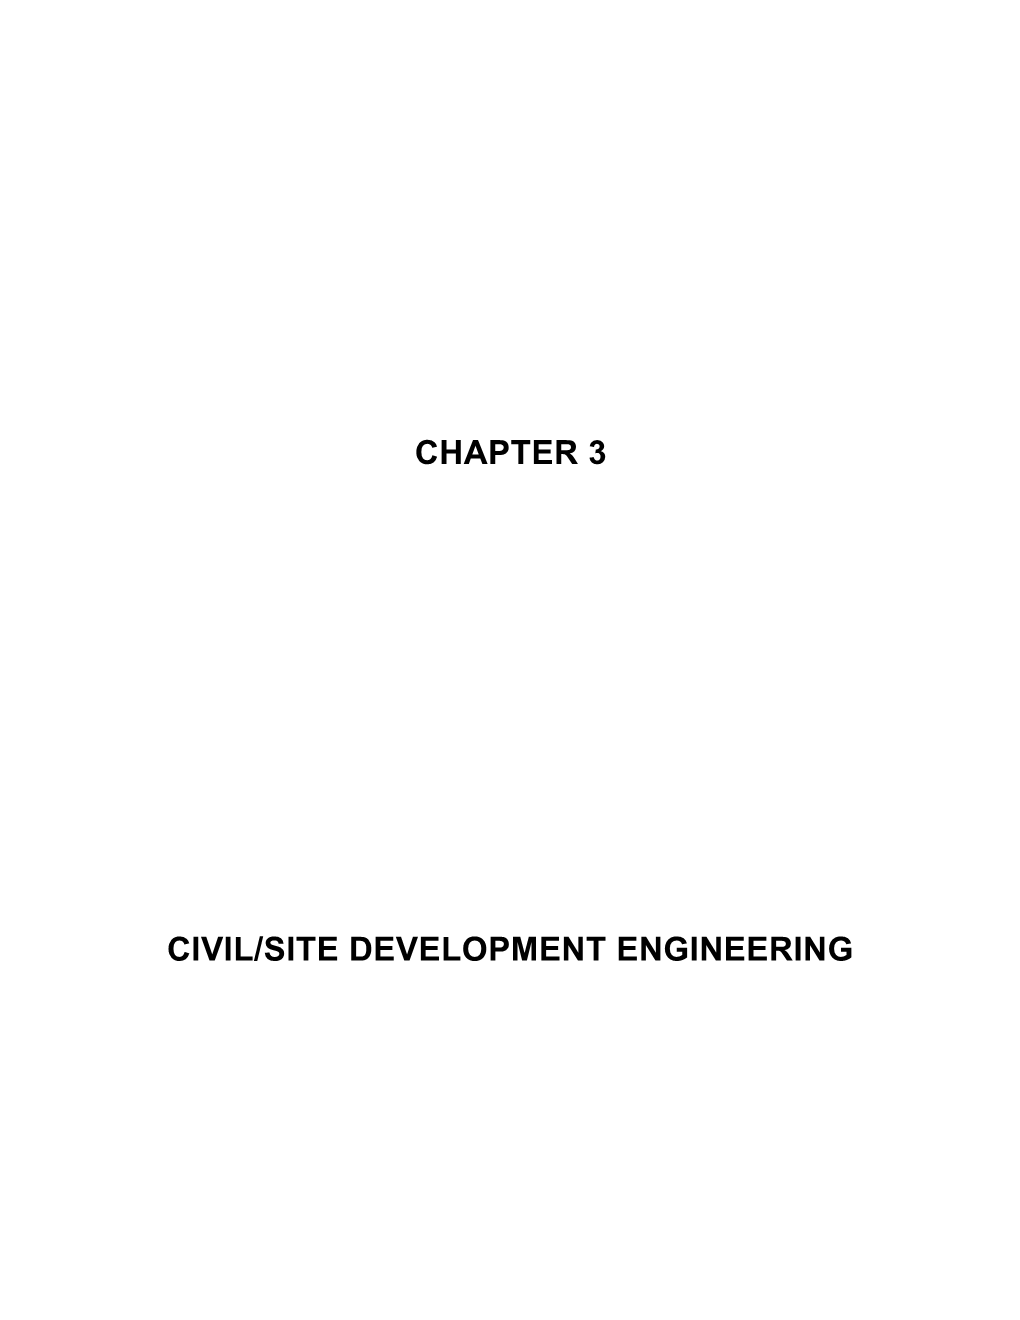 Chapter 3 Civil/Site Development Engineering